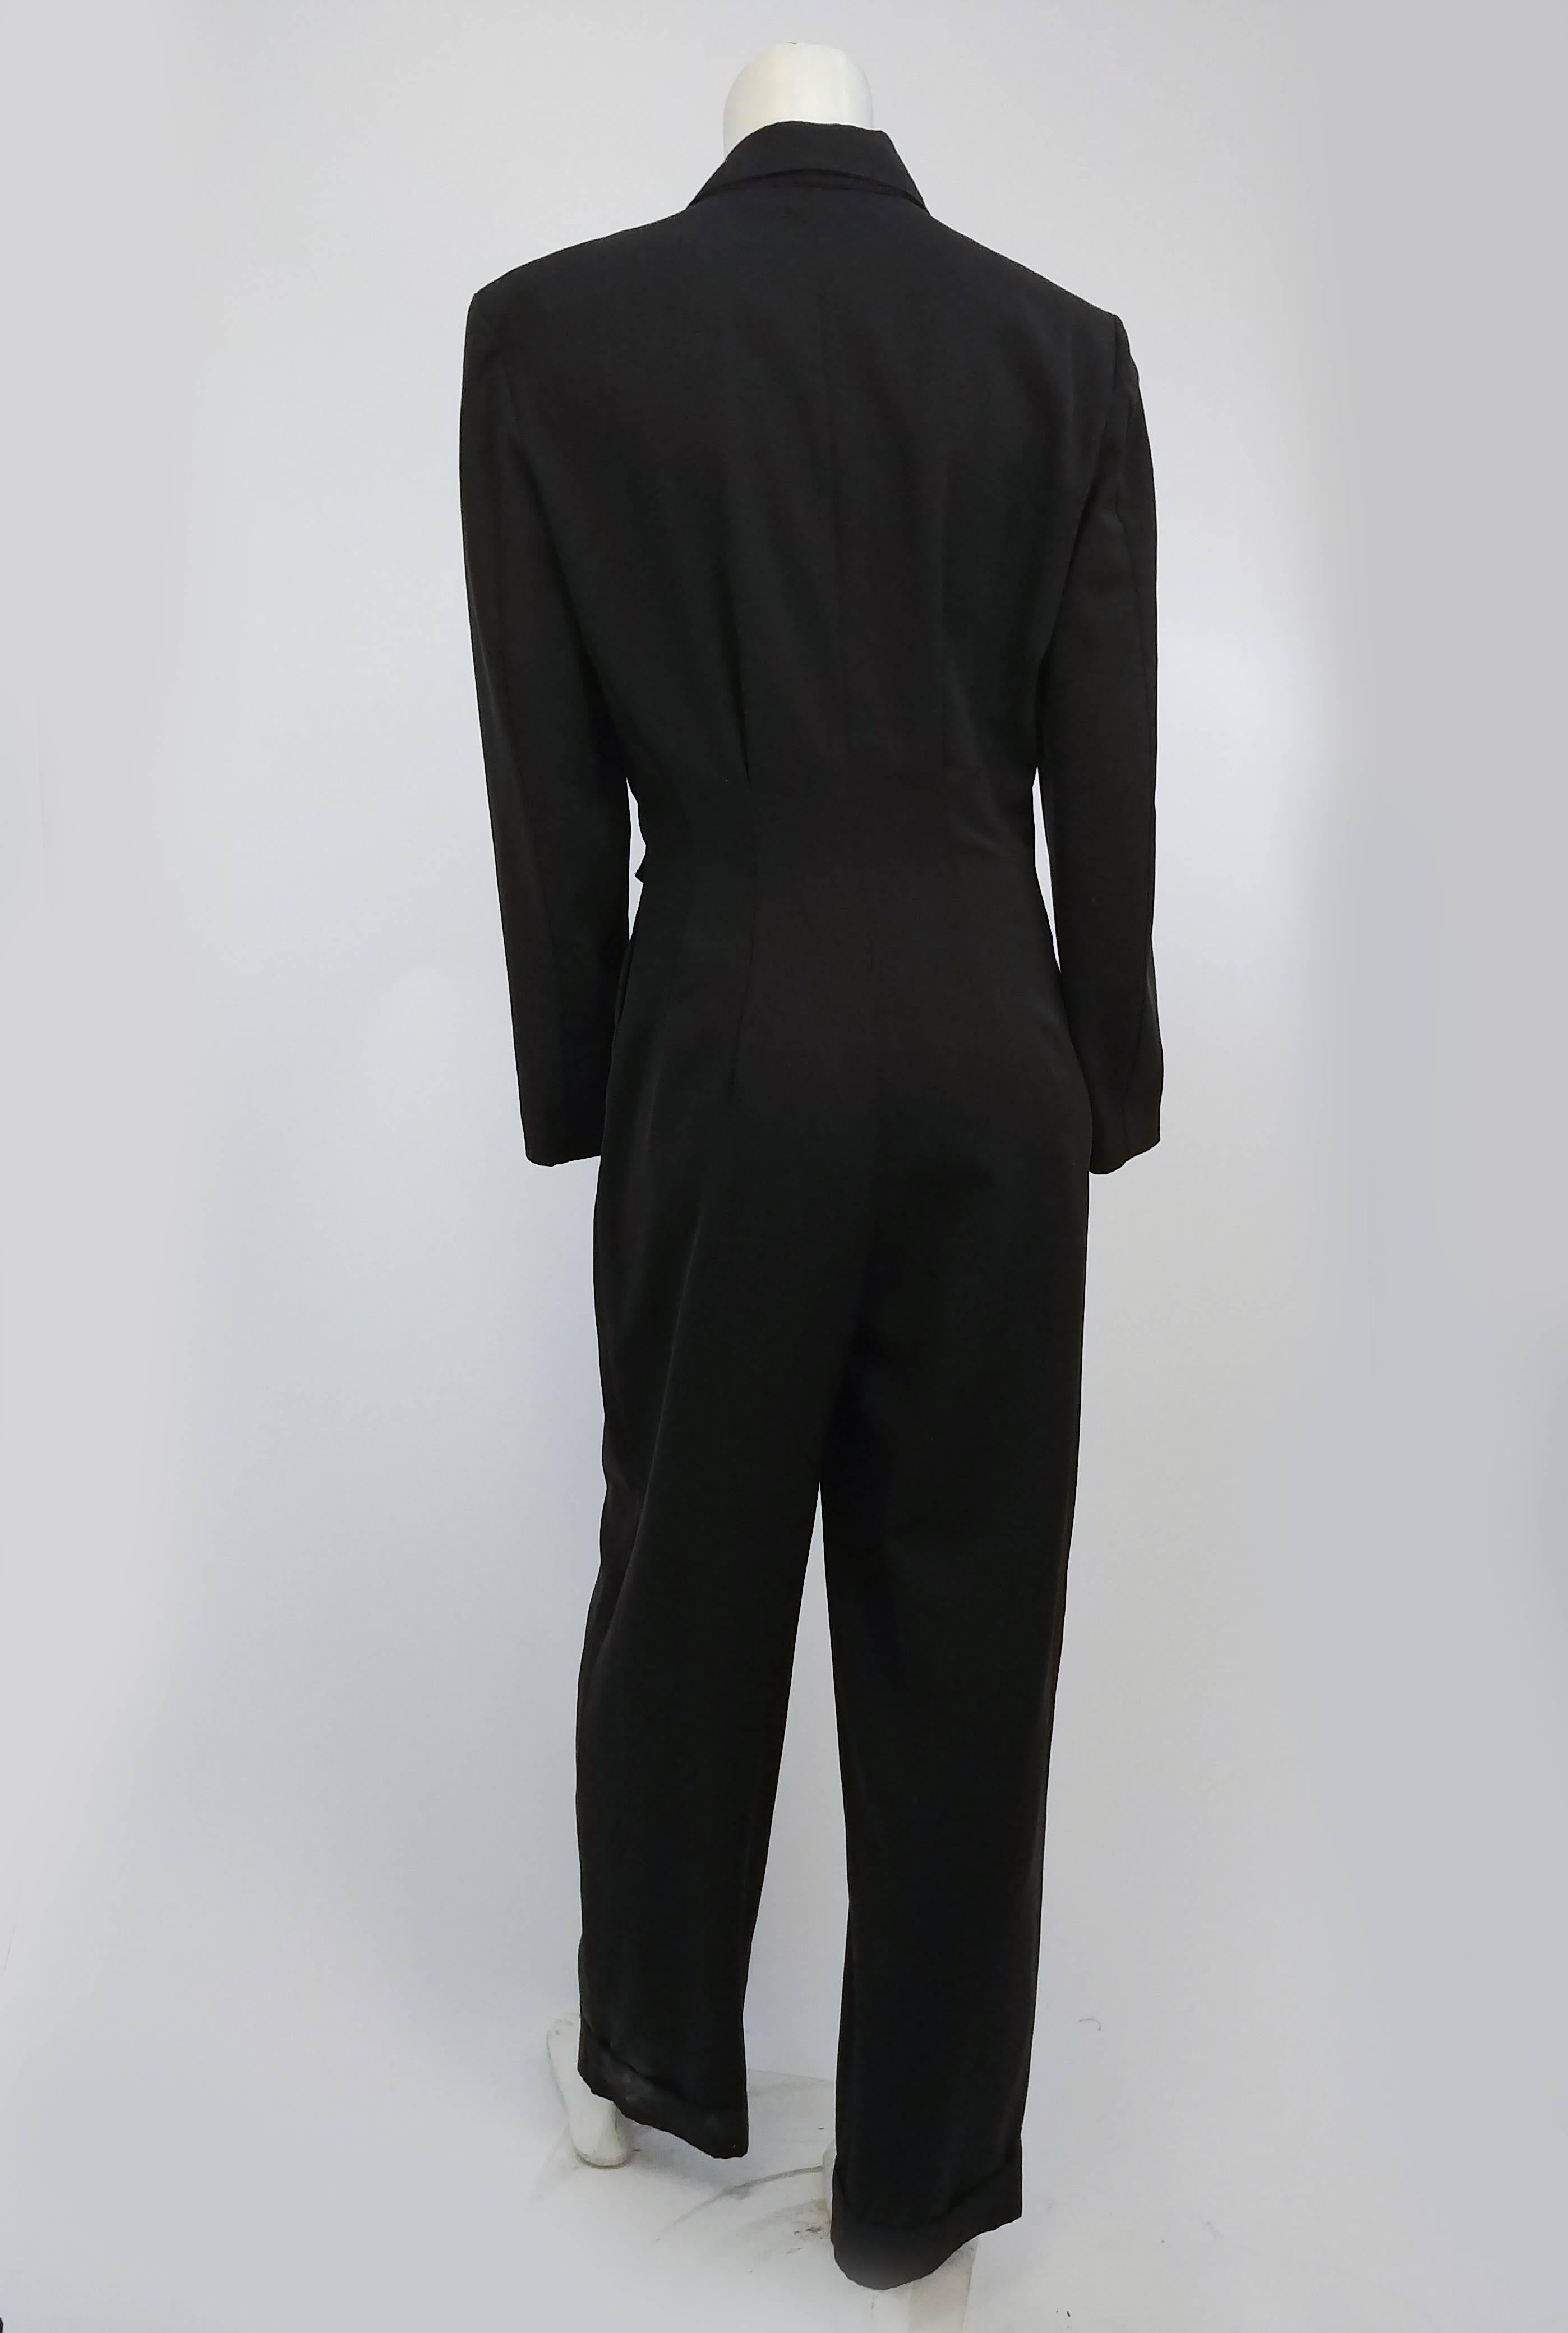 Black 1980s Tuxedo Formal Jumpsuit